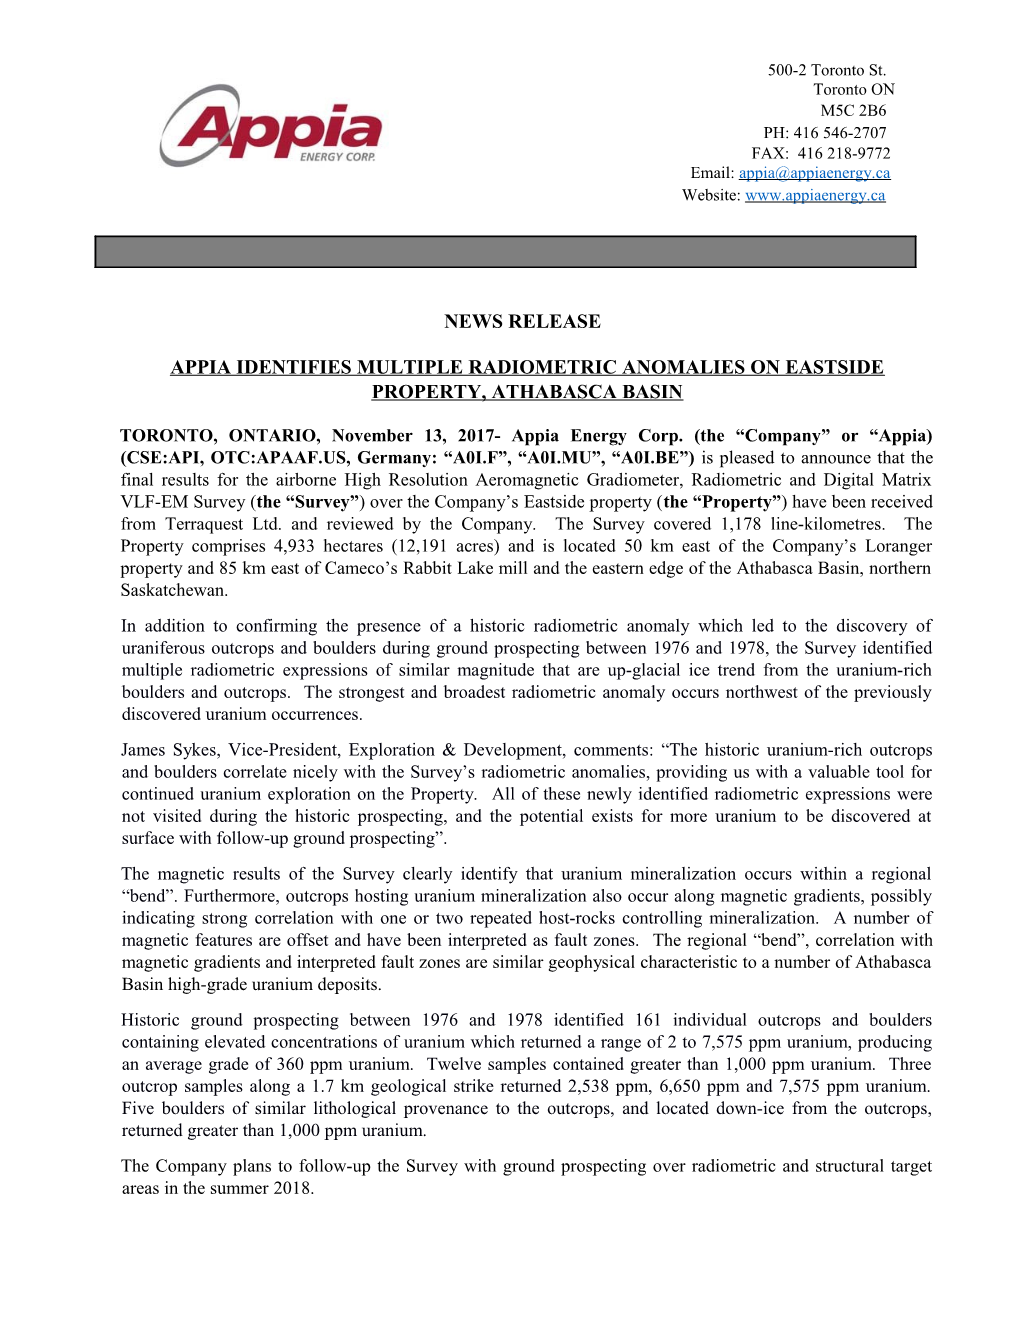 Appia Identifies Multiple Radiometric Anomaliesoneastside Property, Athabasca Basin